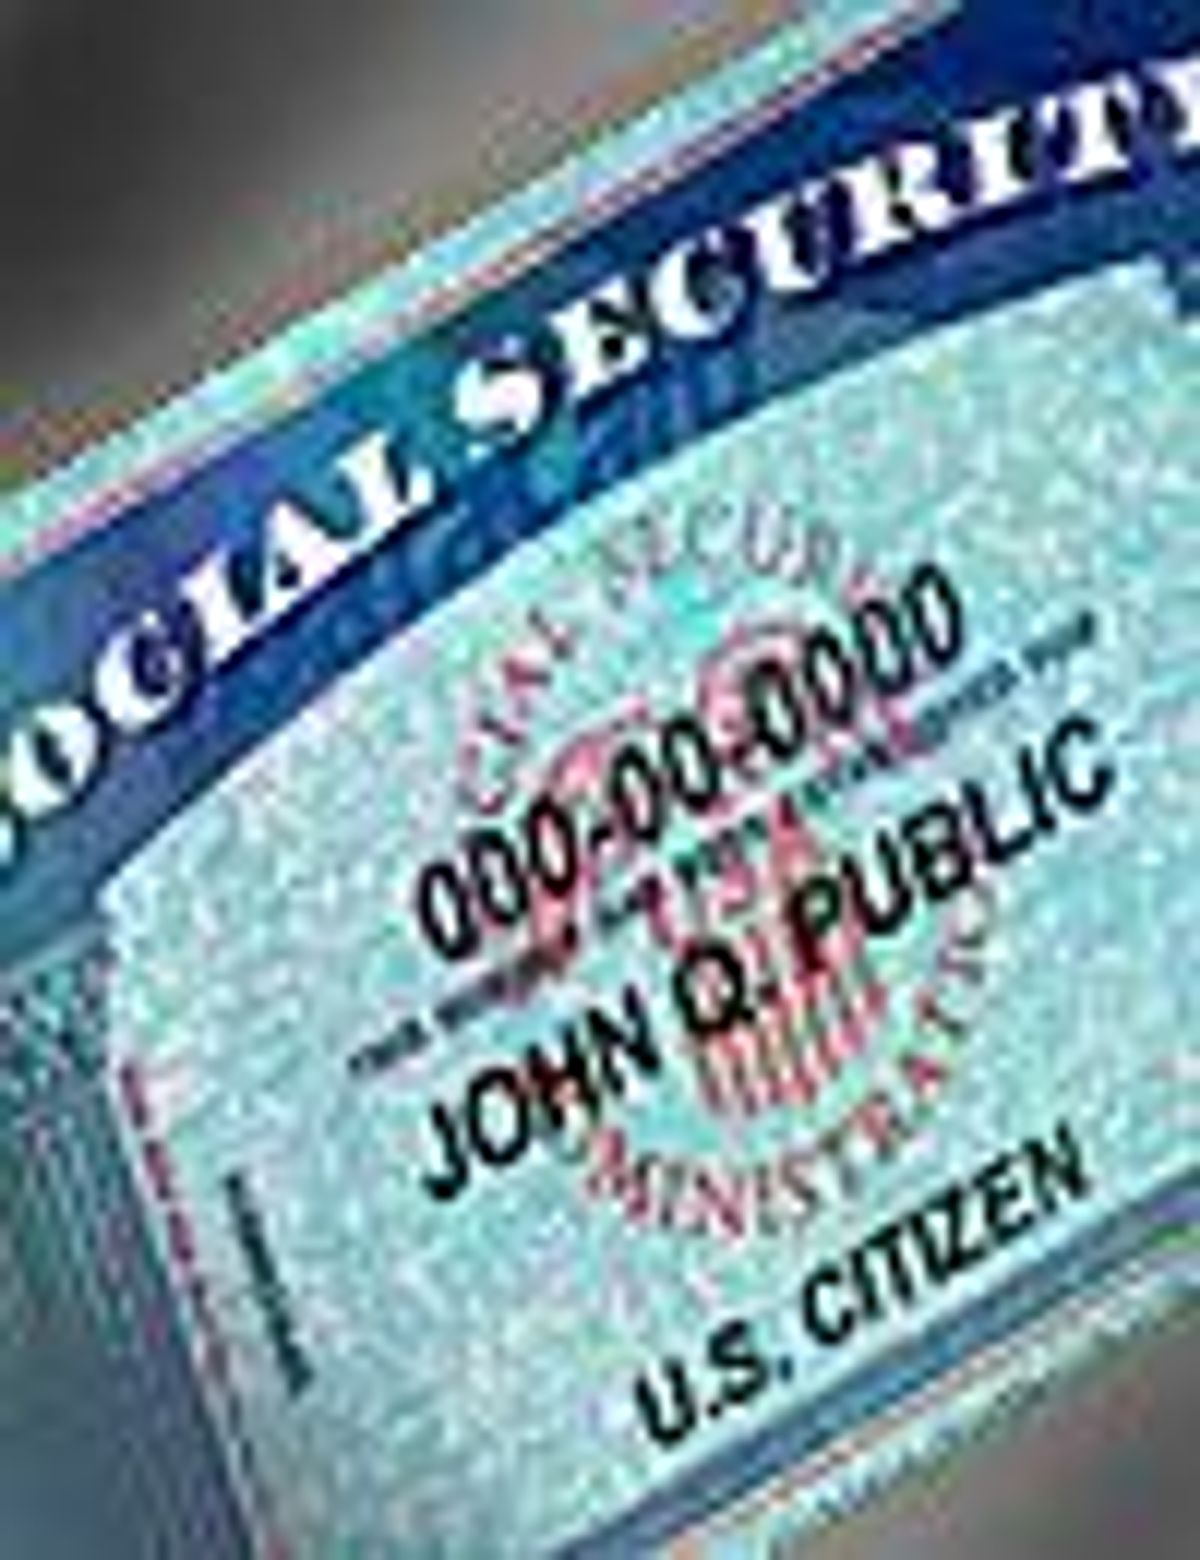 Social_security